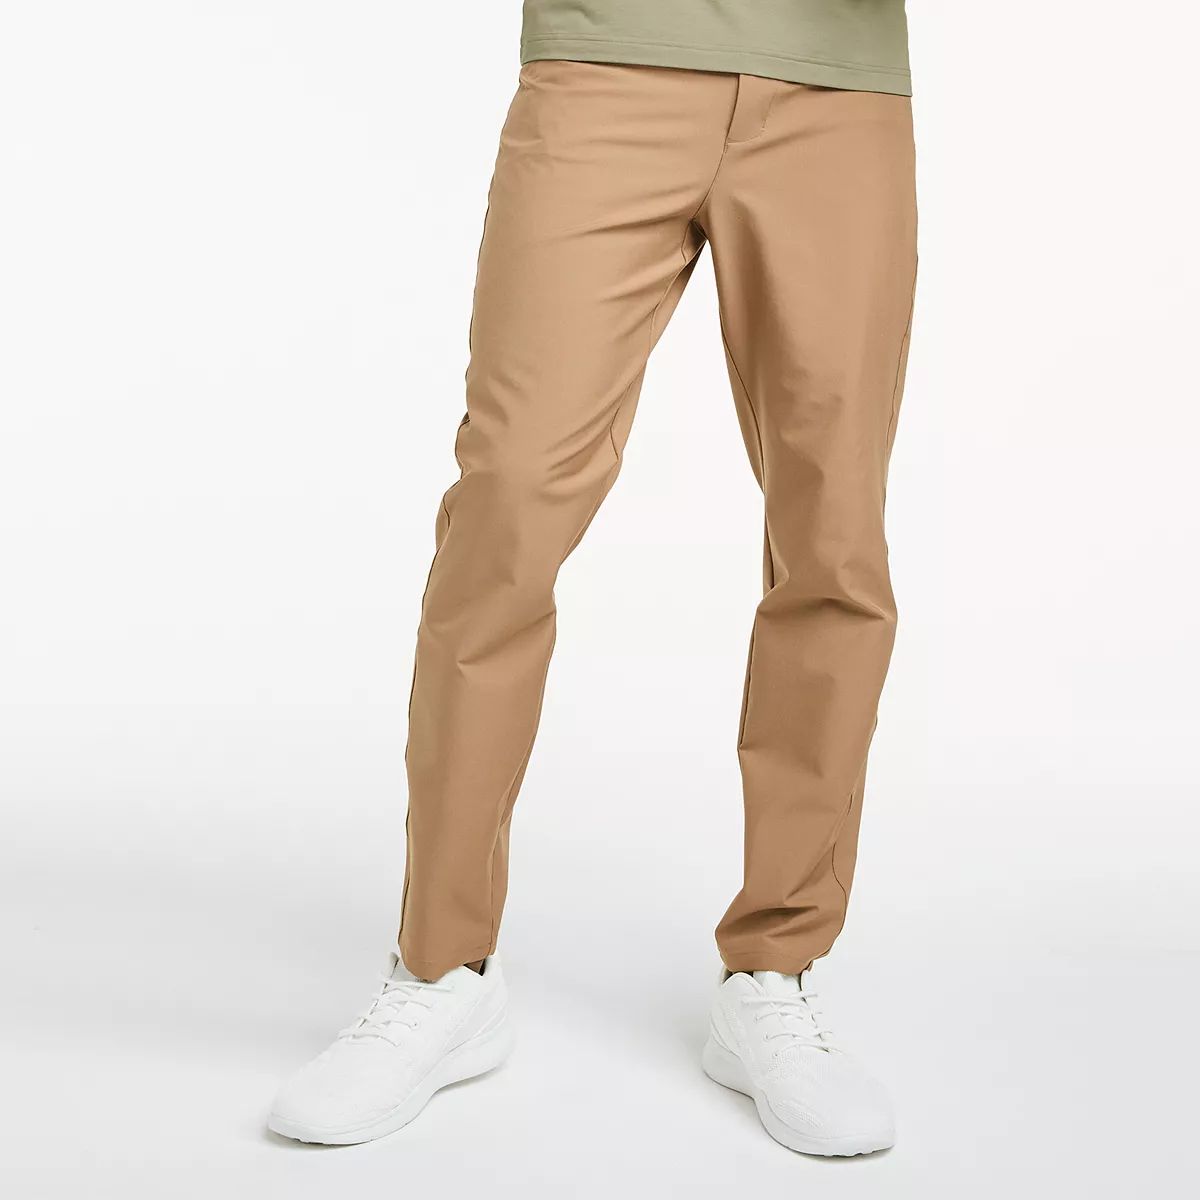 Men's FLX 5-Pocket Slim Fit Pants | Kohl's